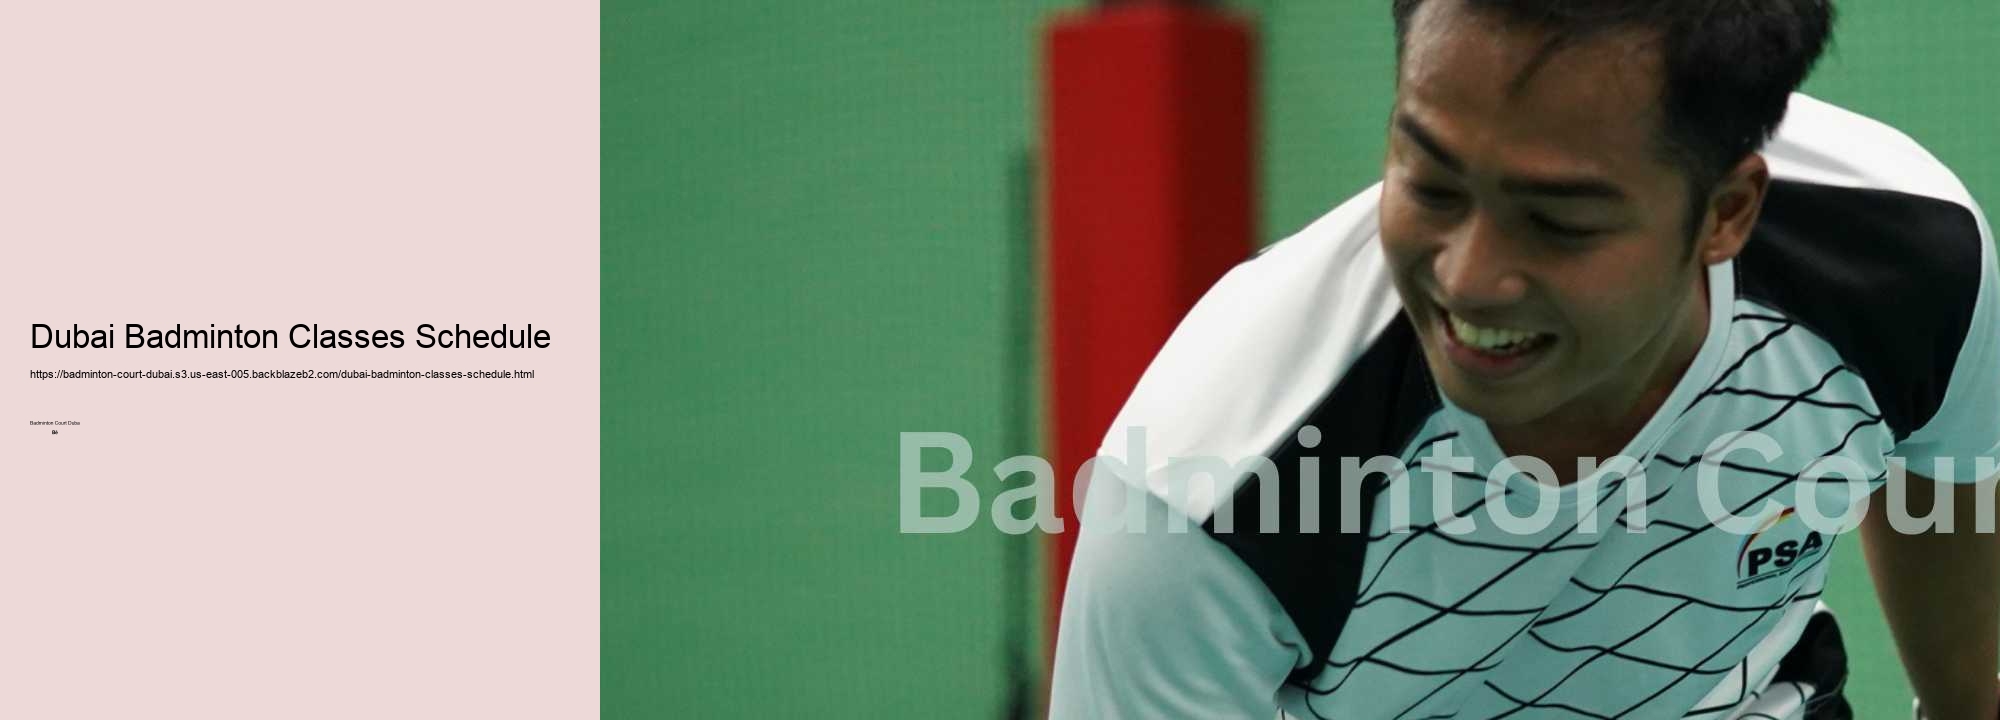 Dubai Badminton Classes Schedule